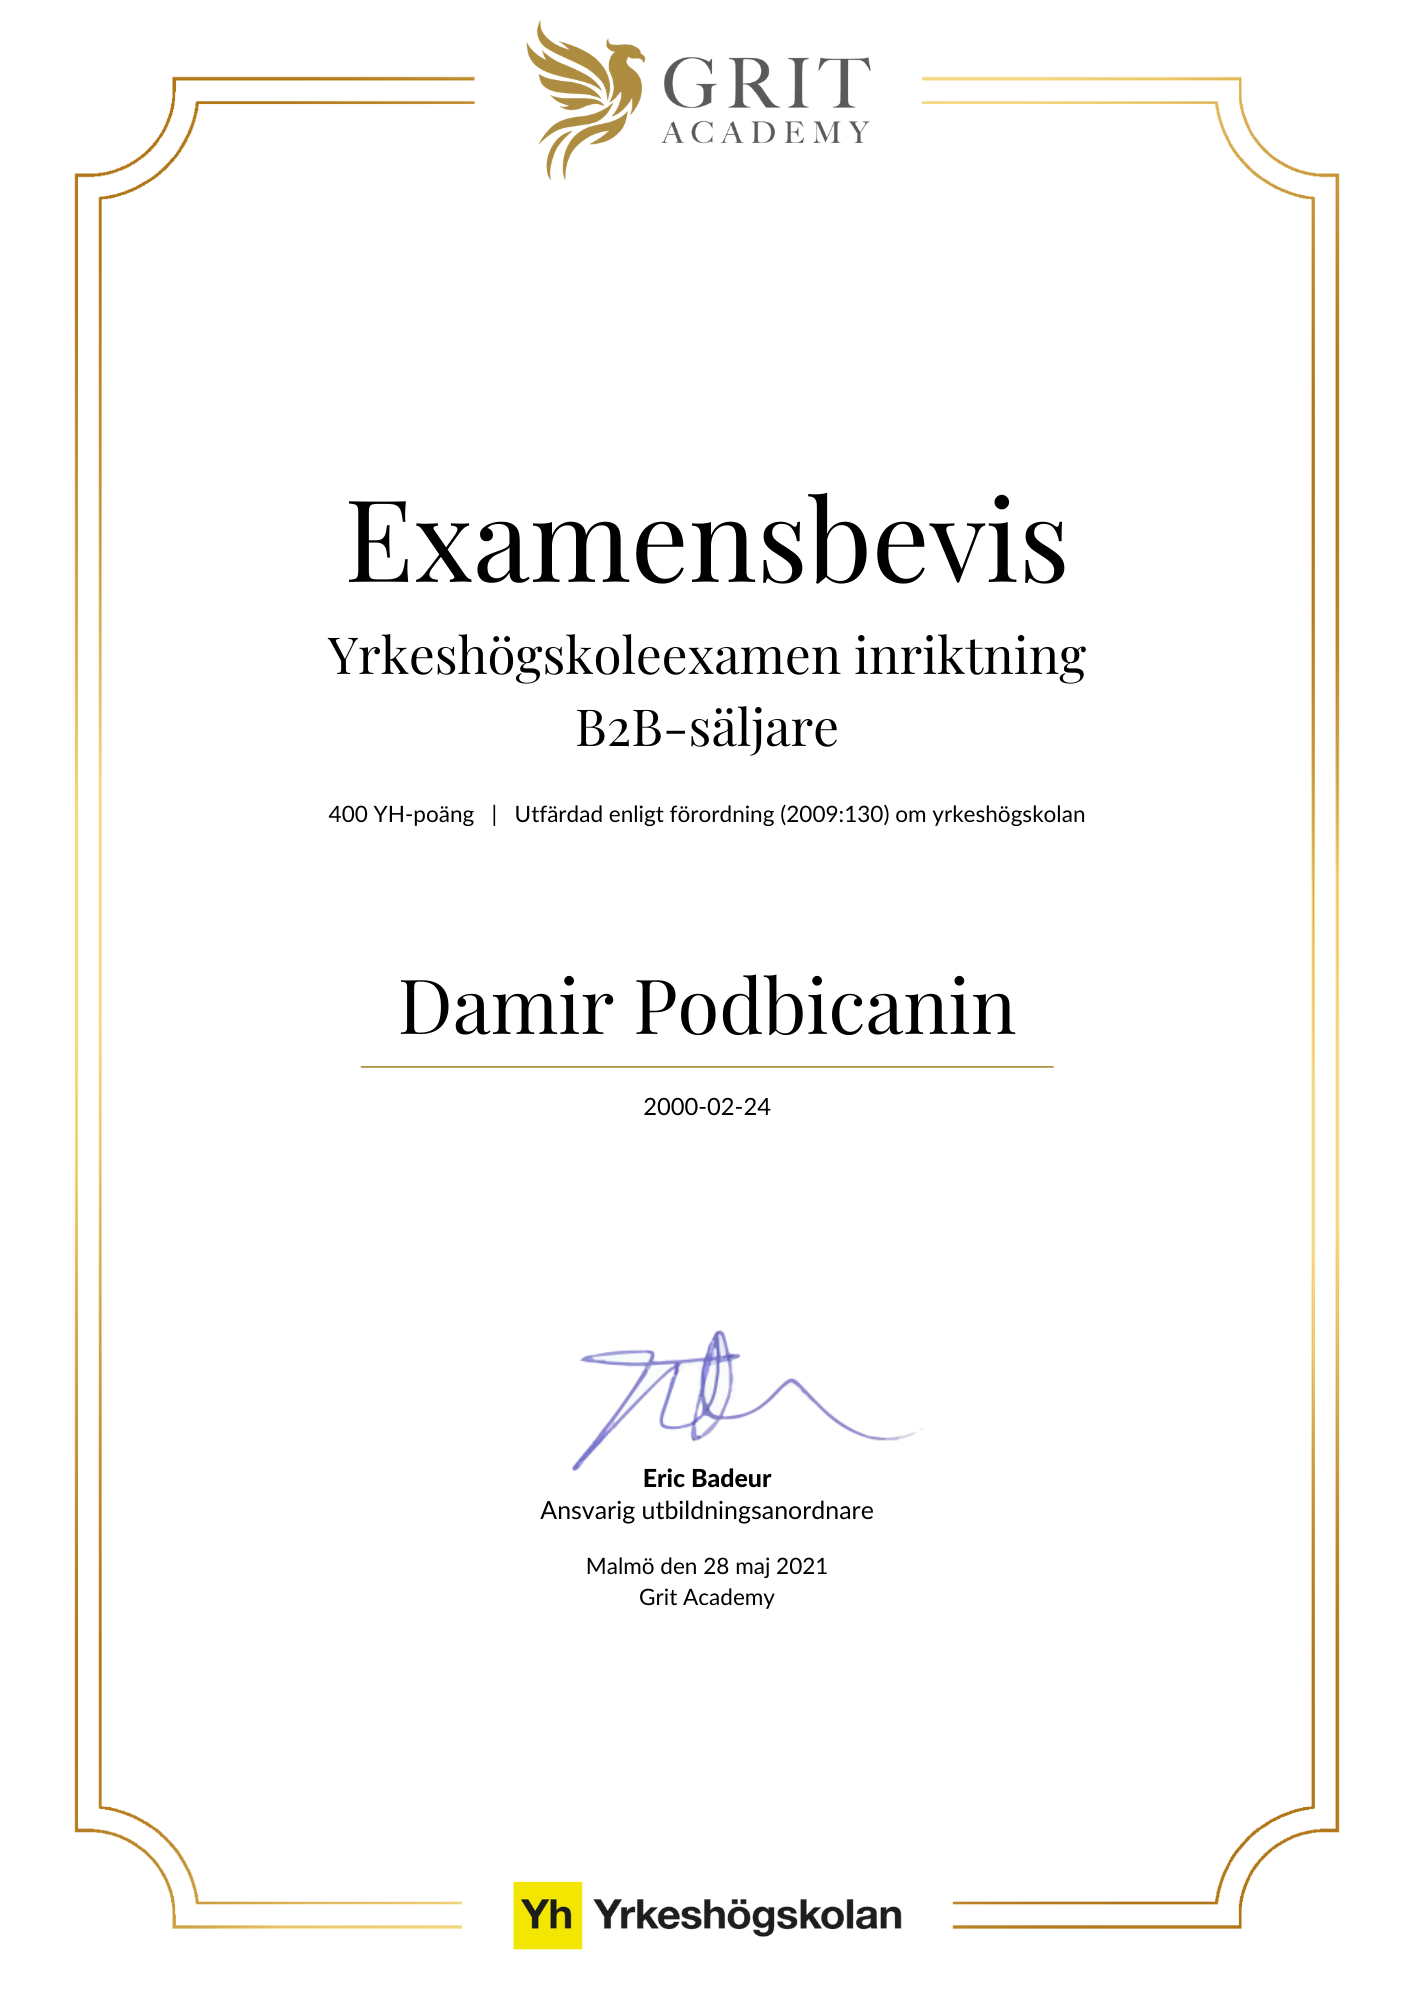 Examensbevis Damir Podbicanin - 1